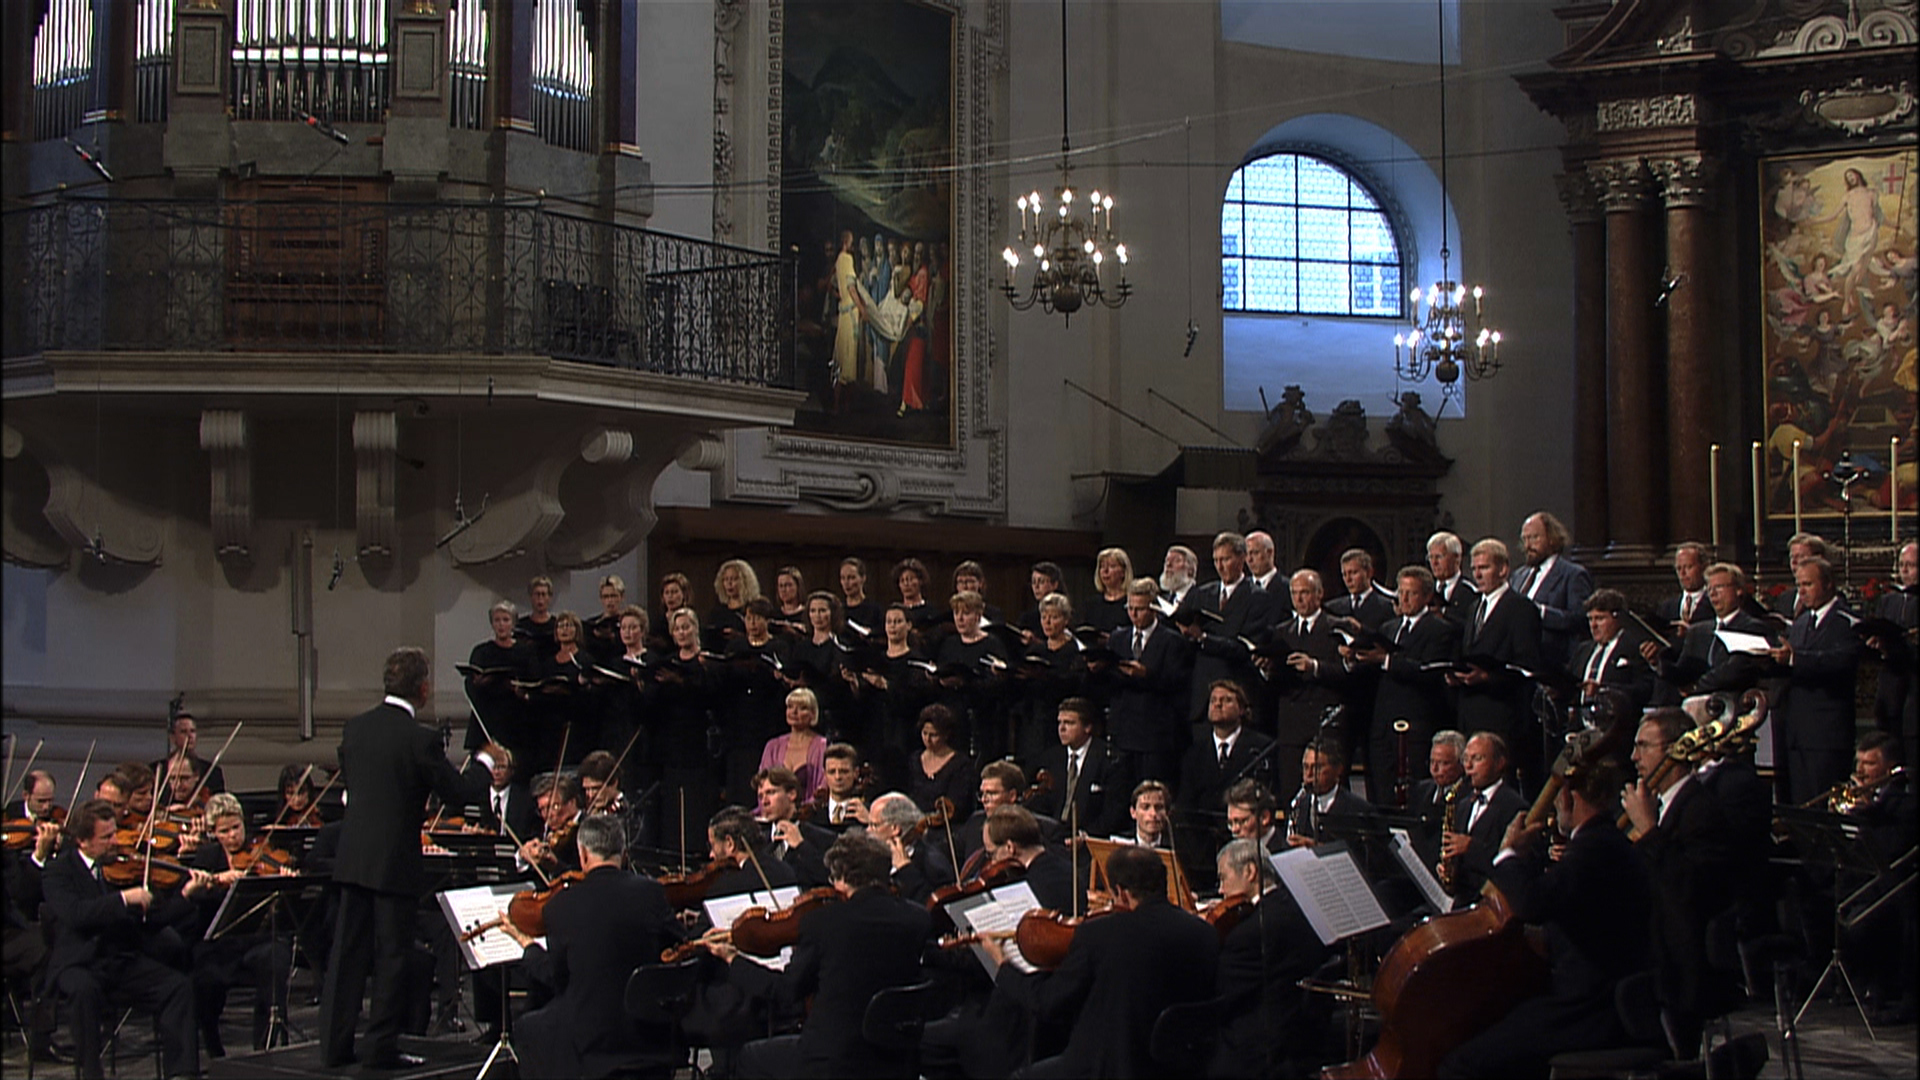 Mozart: Requiem in D Minor, K. 626 - IVa. Offertorium: Domine Jesu